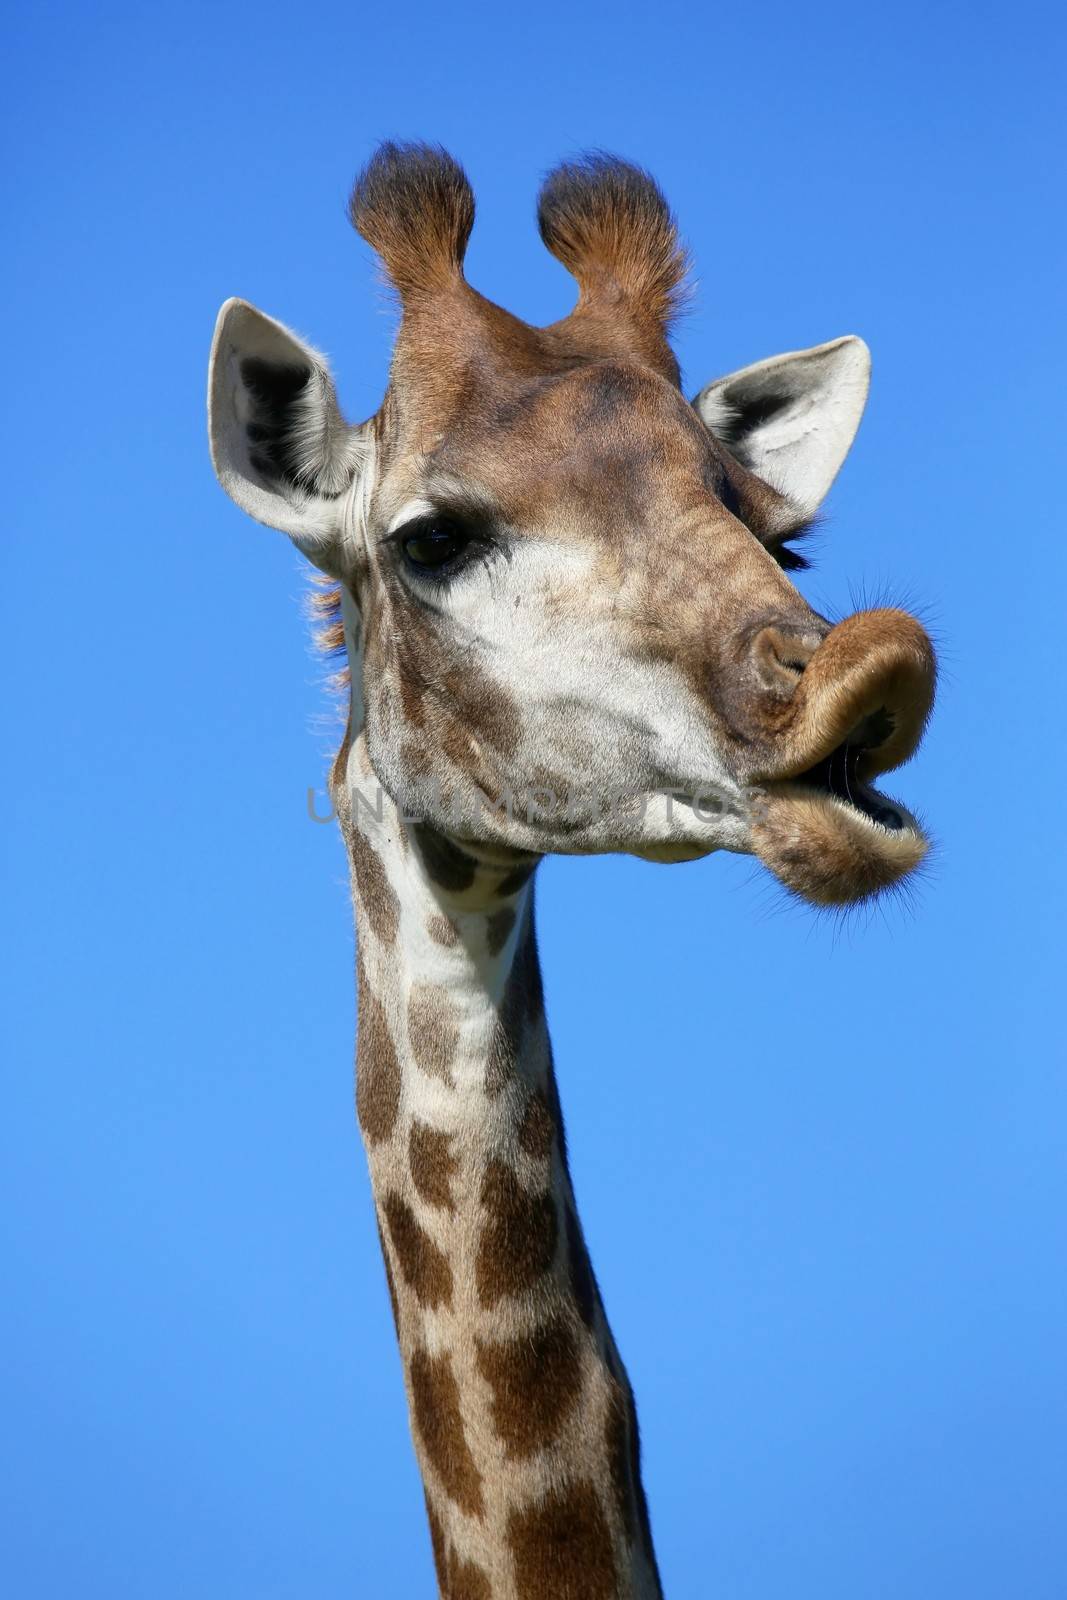 Giraffe Funny Talk by fouroaks